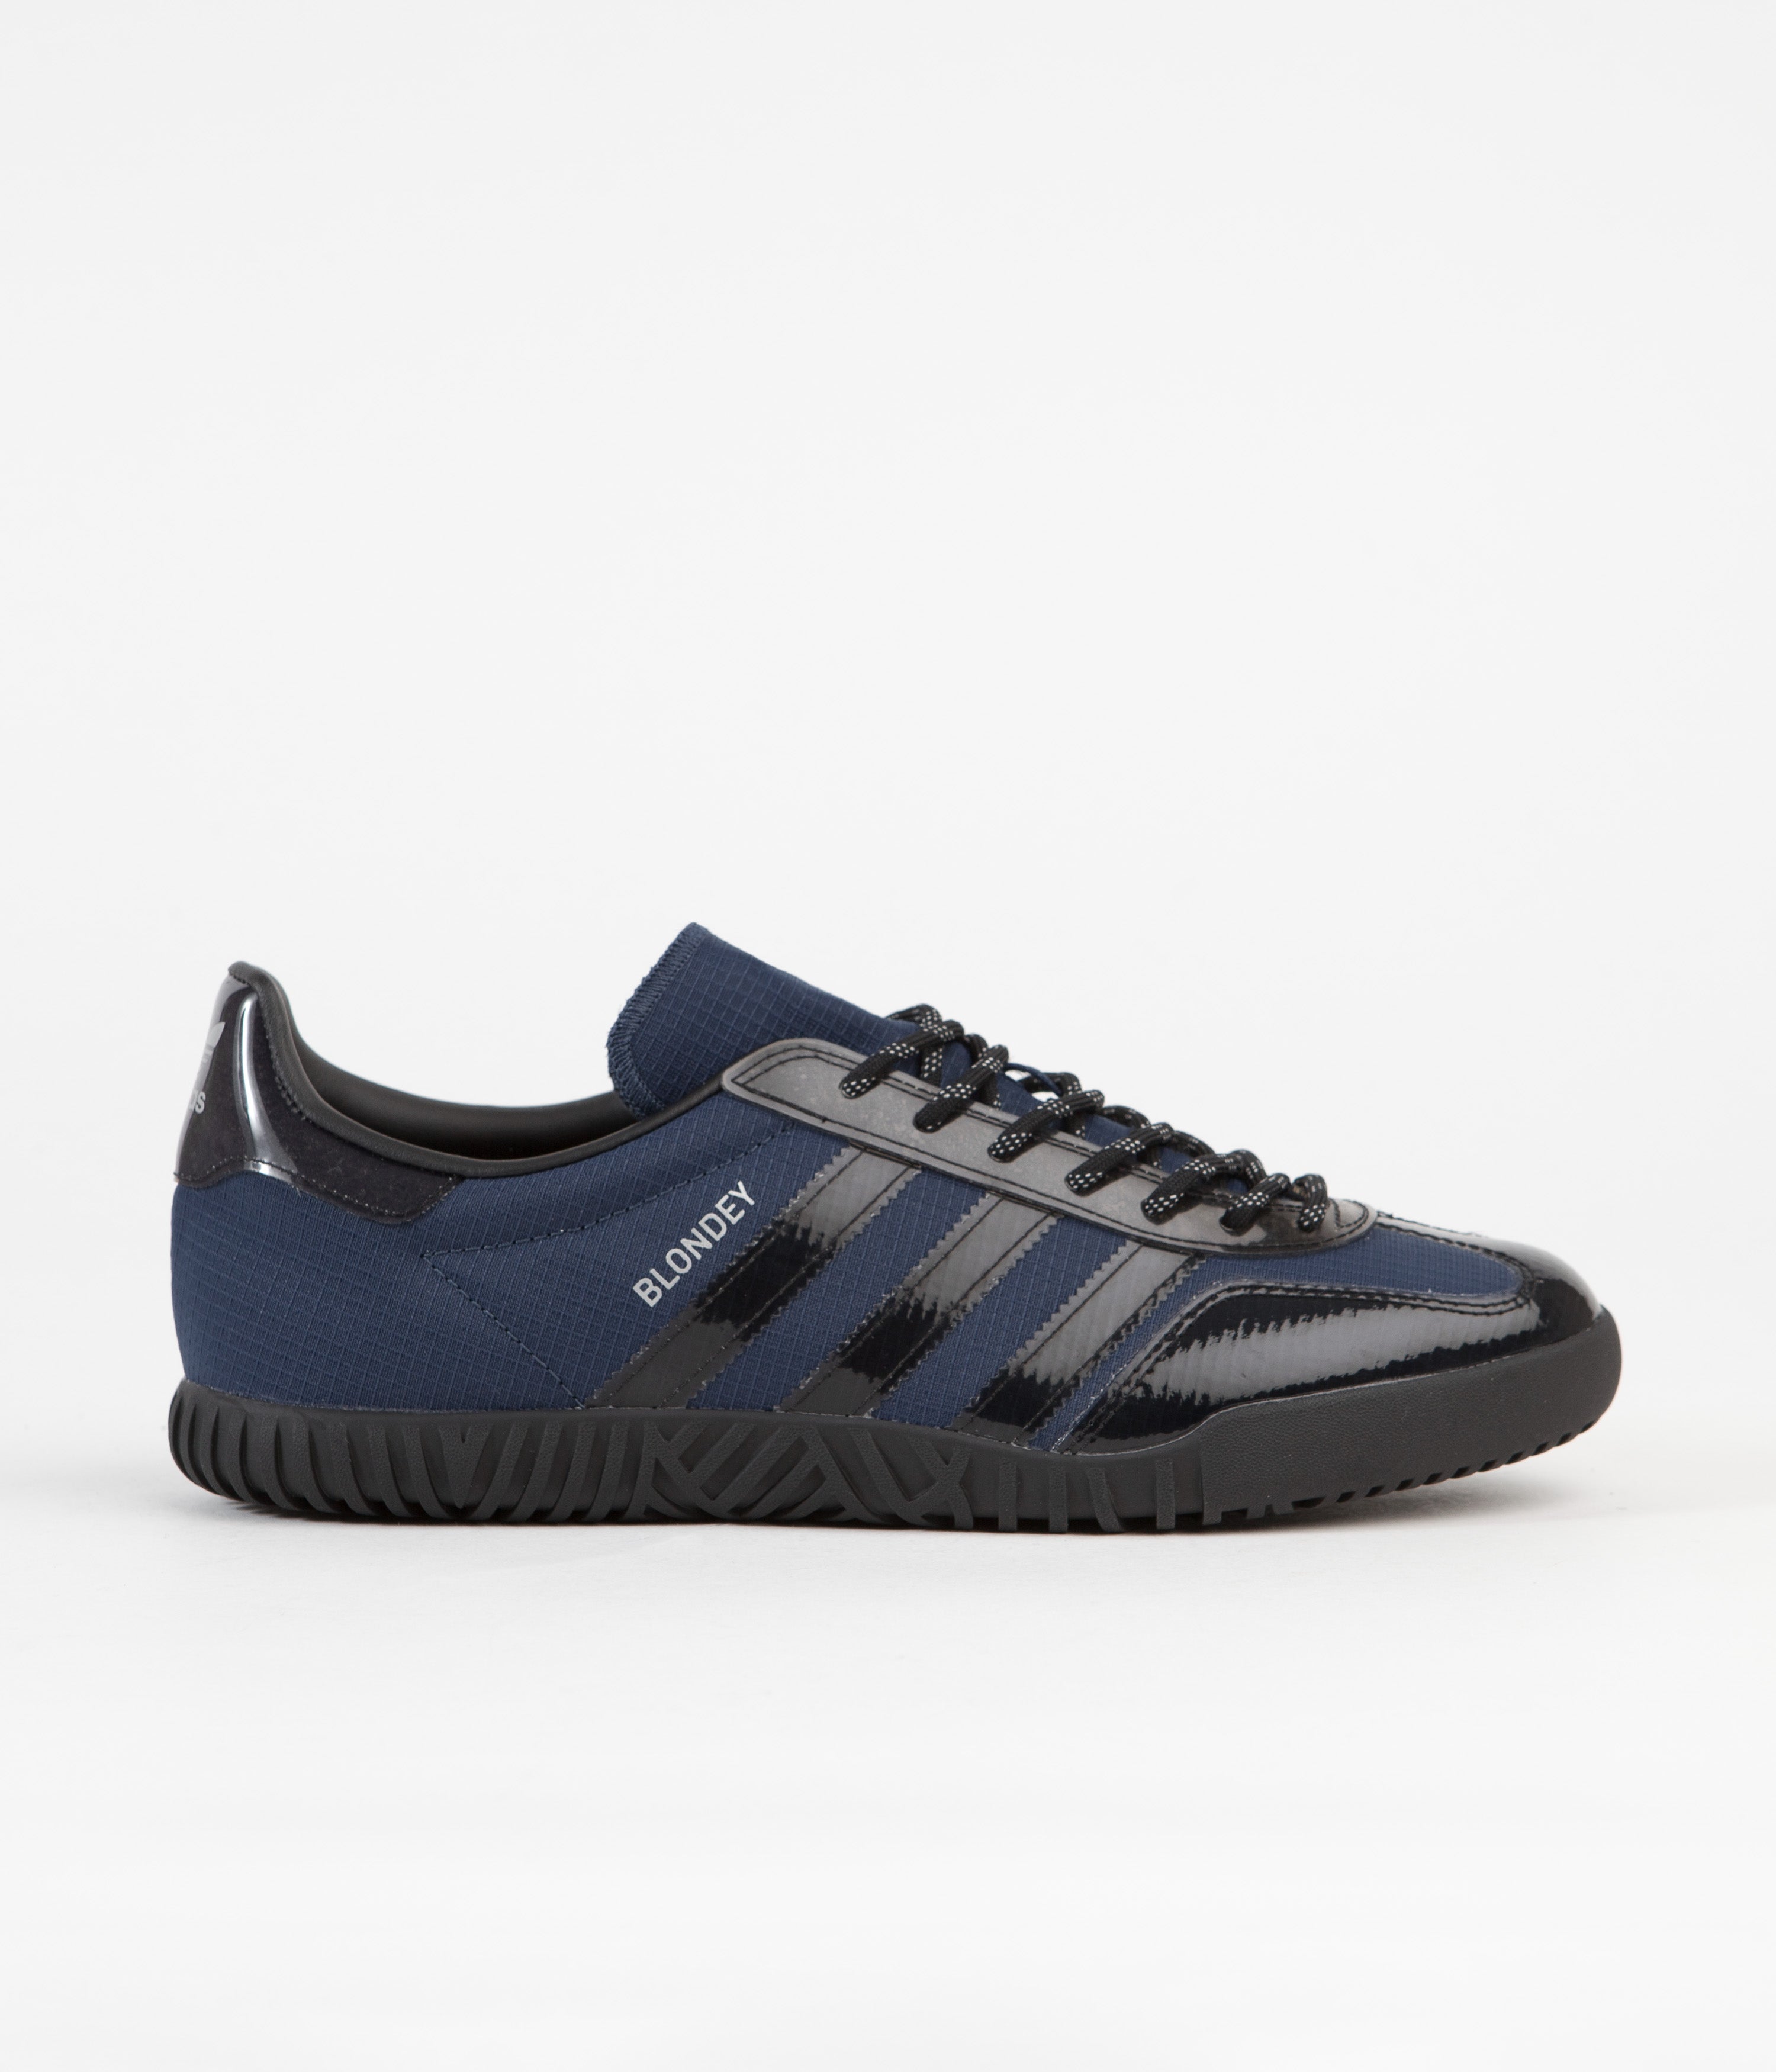 Adidas Blondey Gazelle Shoes - Mineral Blue / Core Black / Metallic Si ...